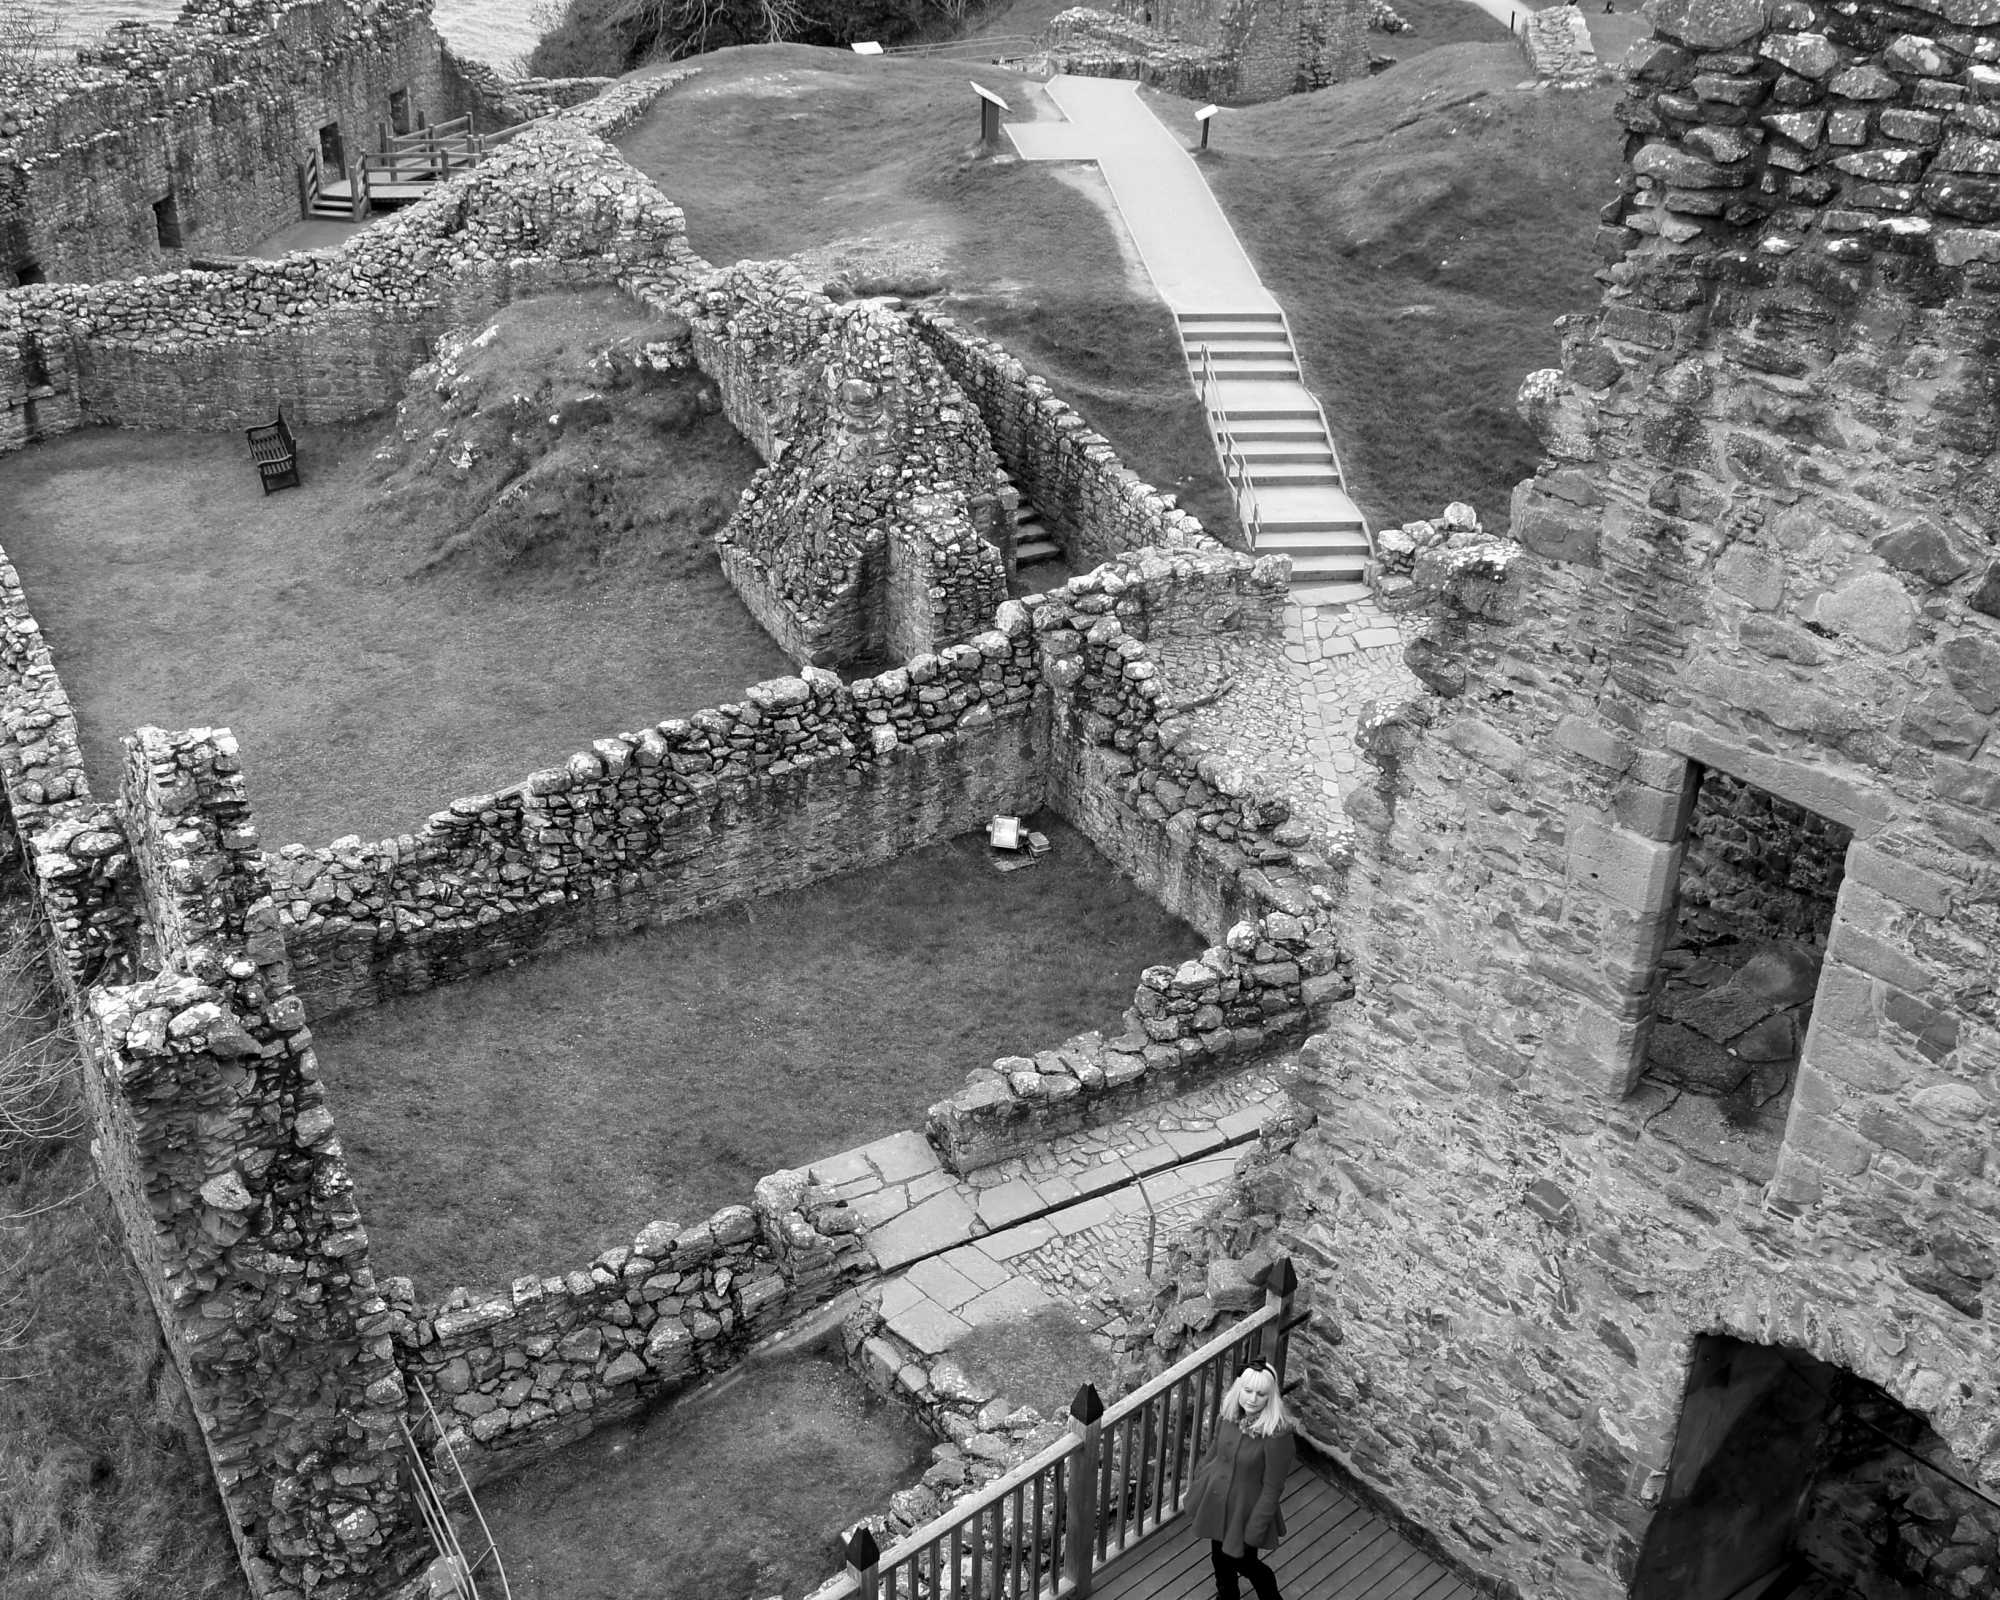 Lisa at the Bottom of Urquhart Castle